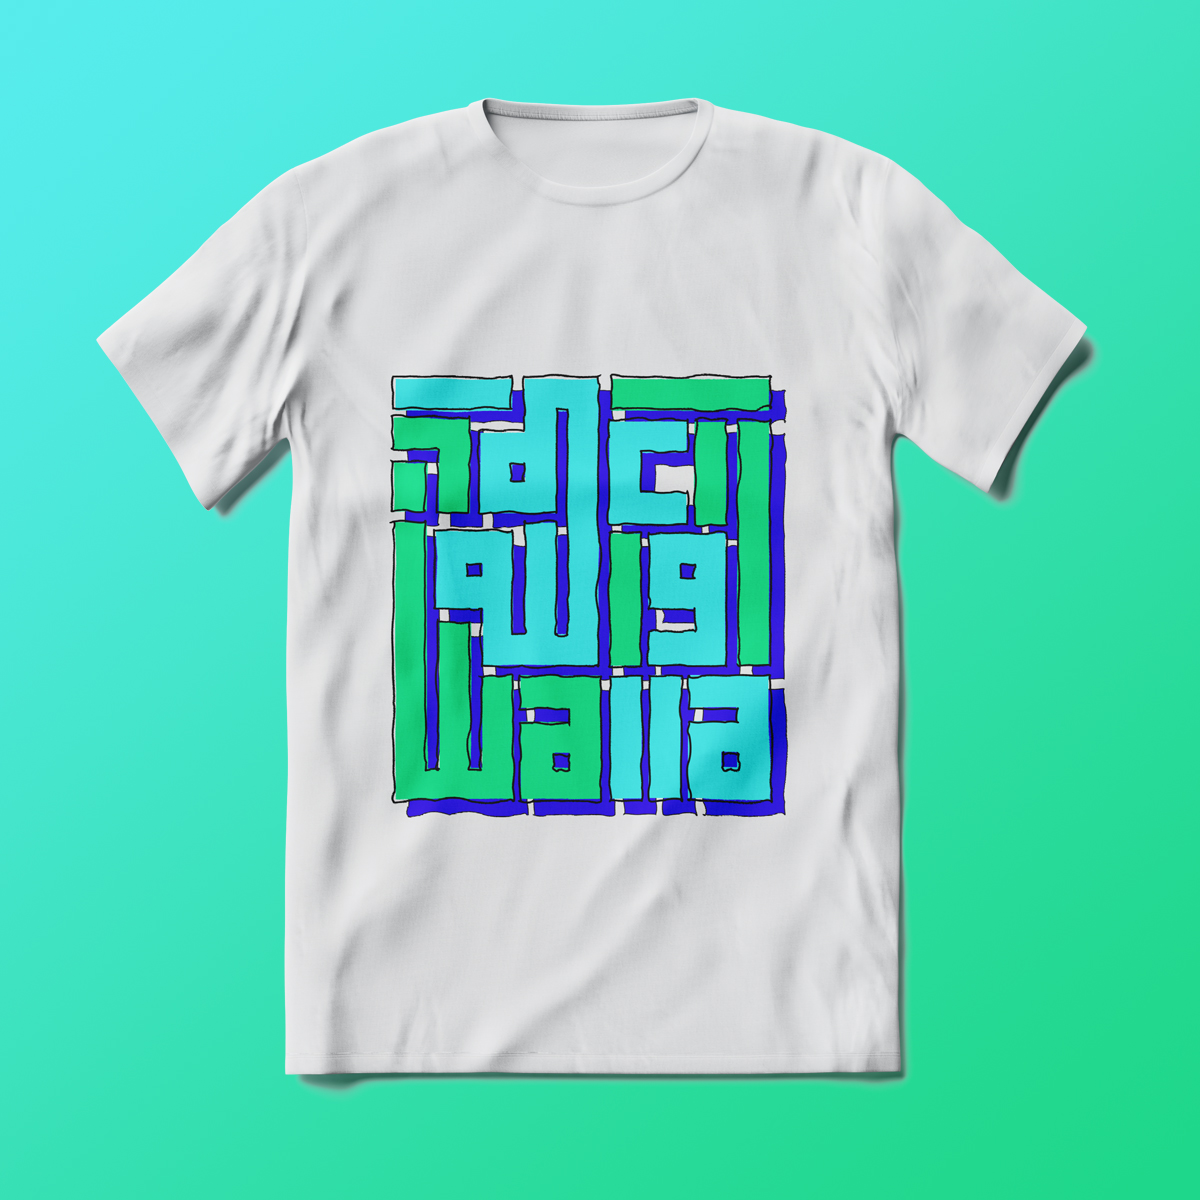 Walla T-shirt